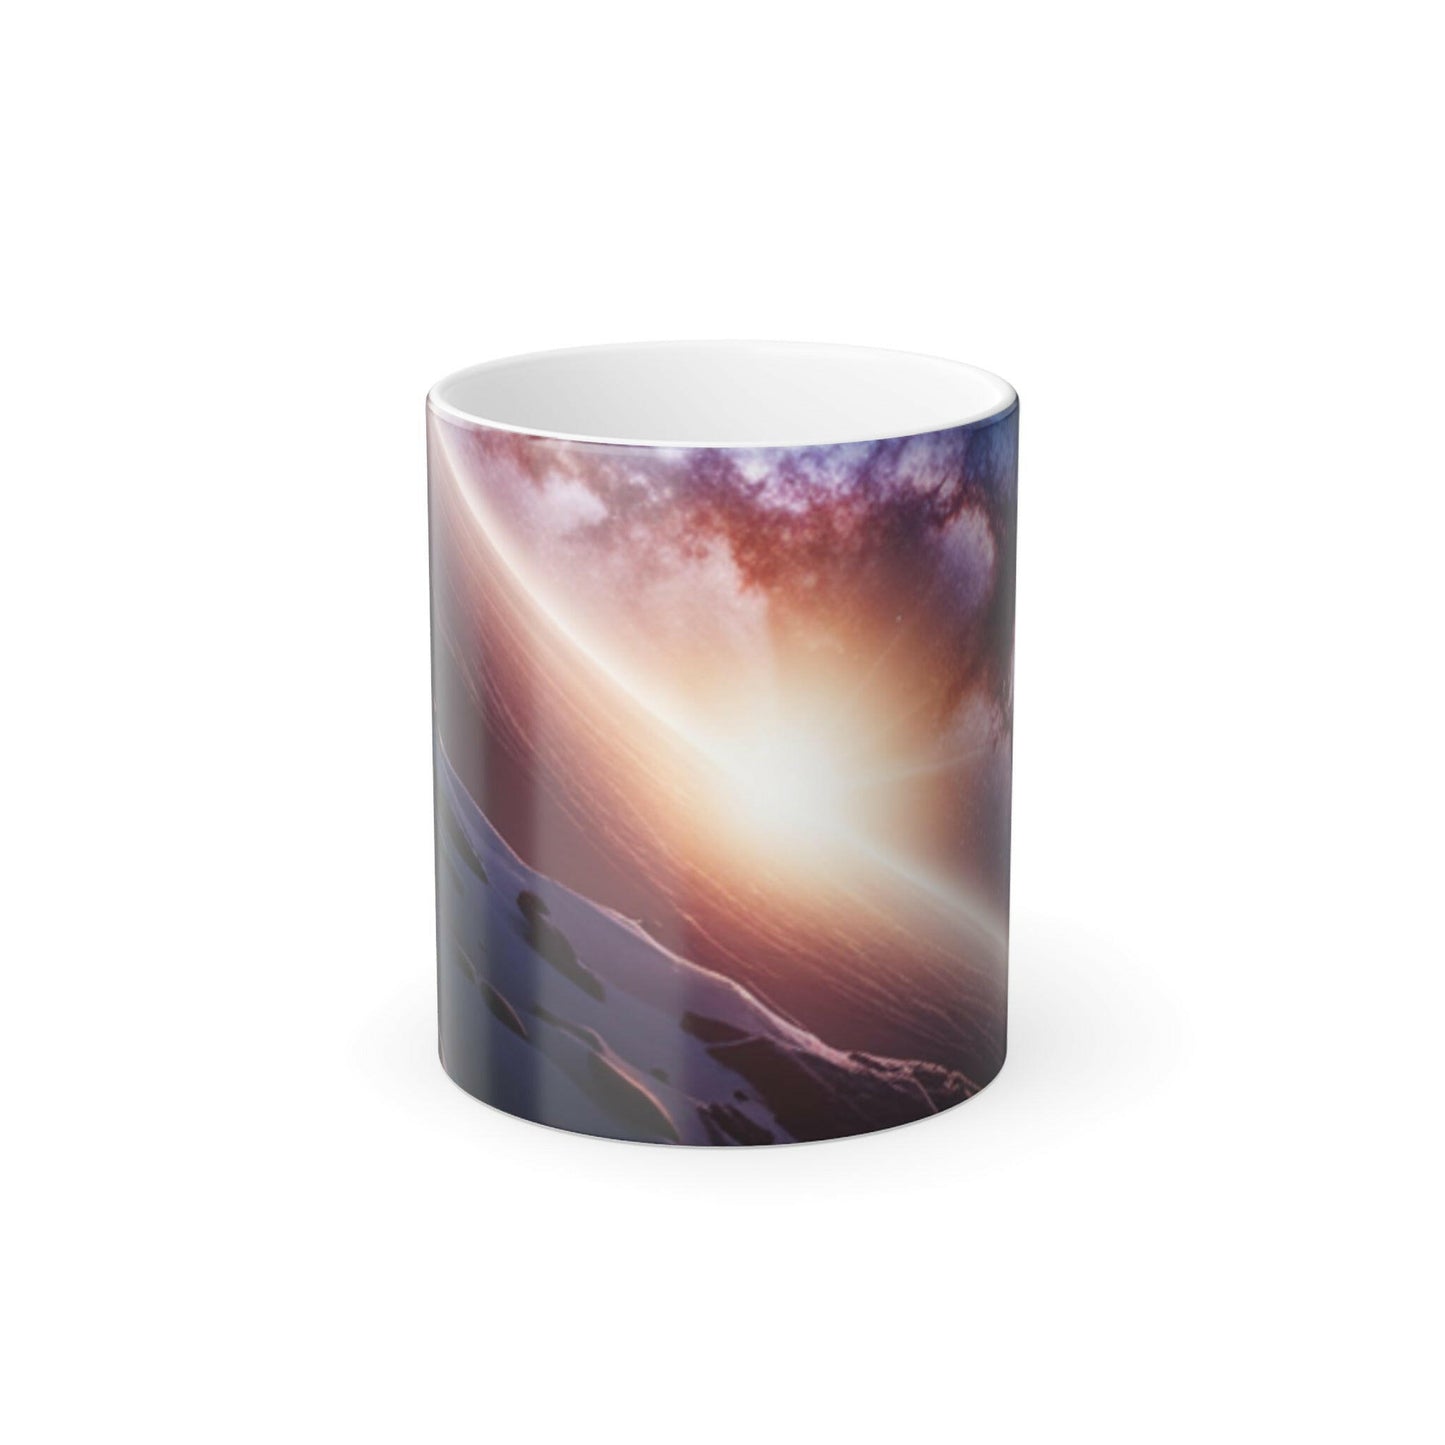 Color Morphing Mug, 11oz with Space theme